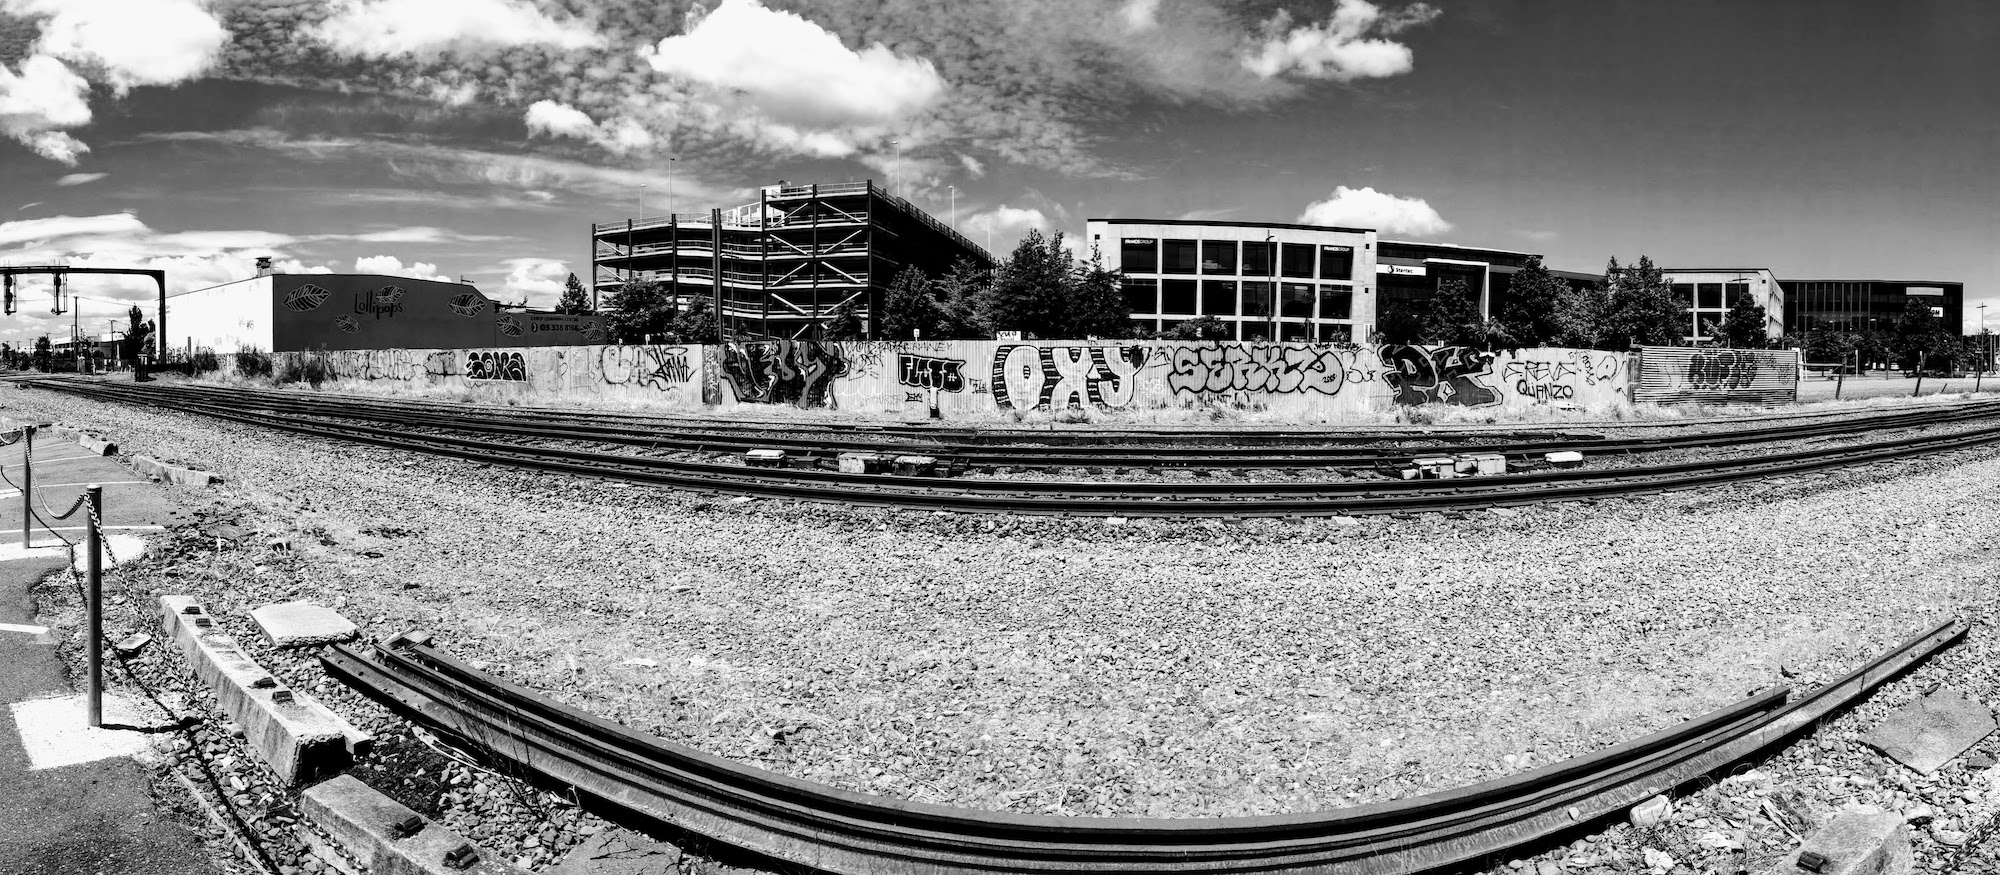 Jetsam 69: railway tracks graffiti